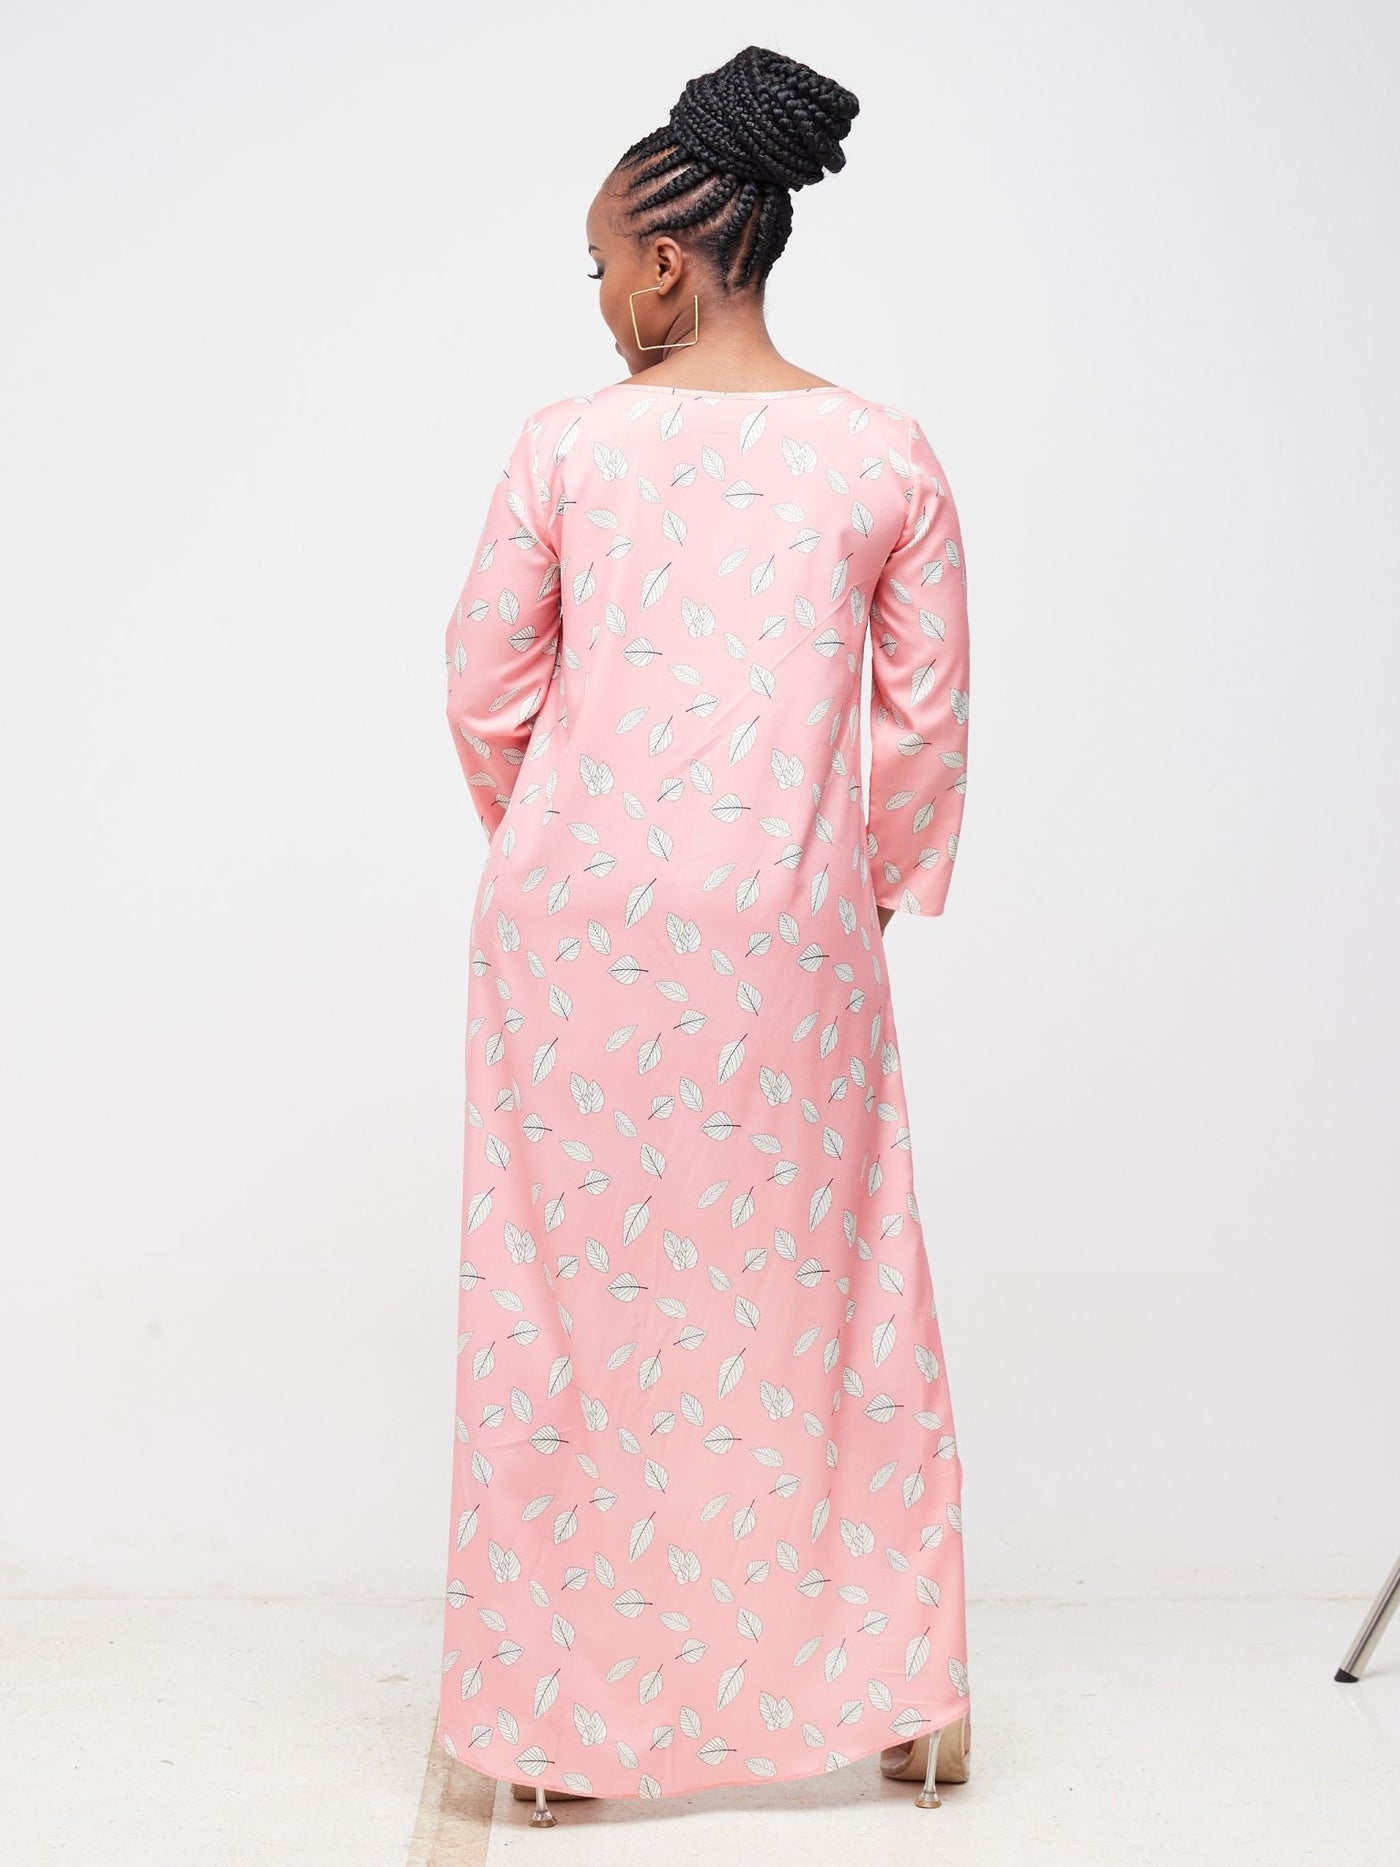 Vivo Tana 3/4 Tulip Sleeve Overlap Maxi Top - Pink Floral Print - Shop Zetu Kenya